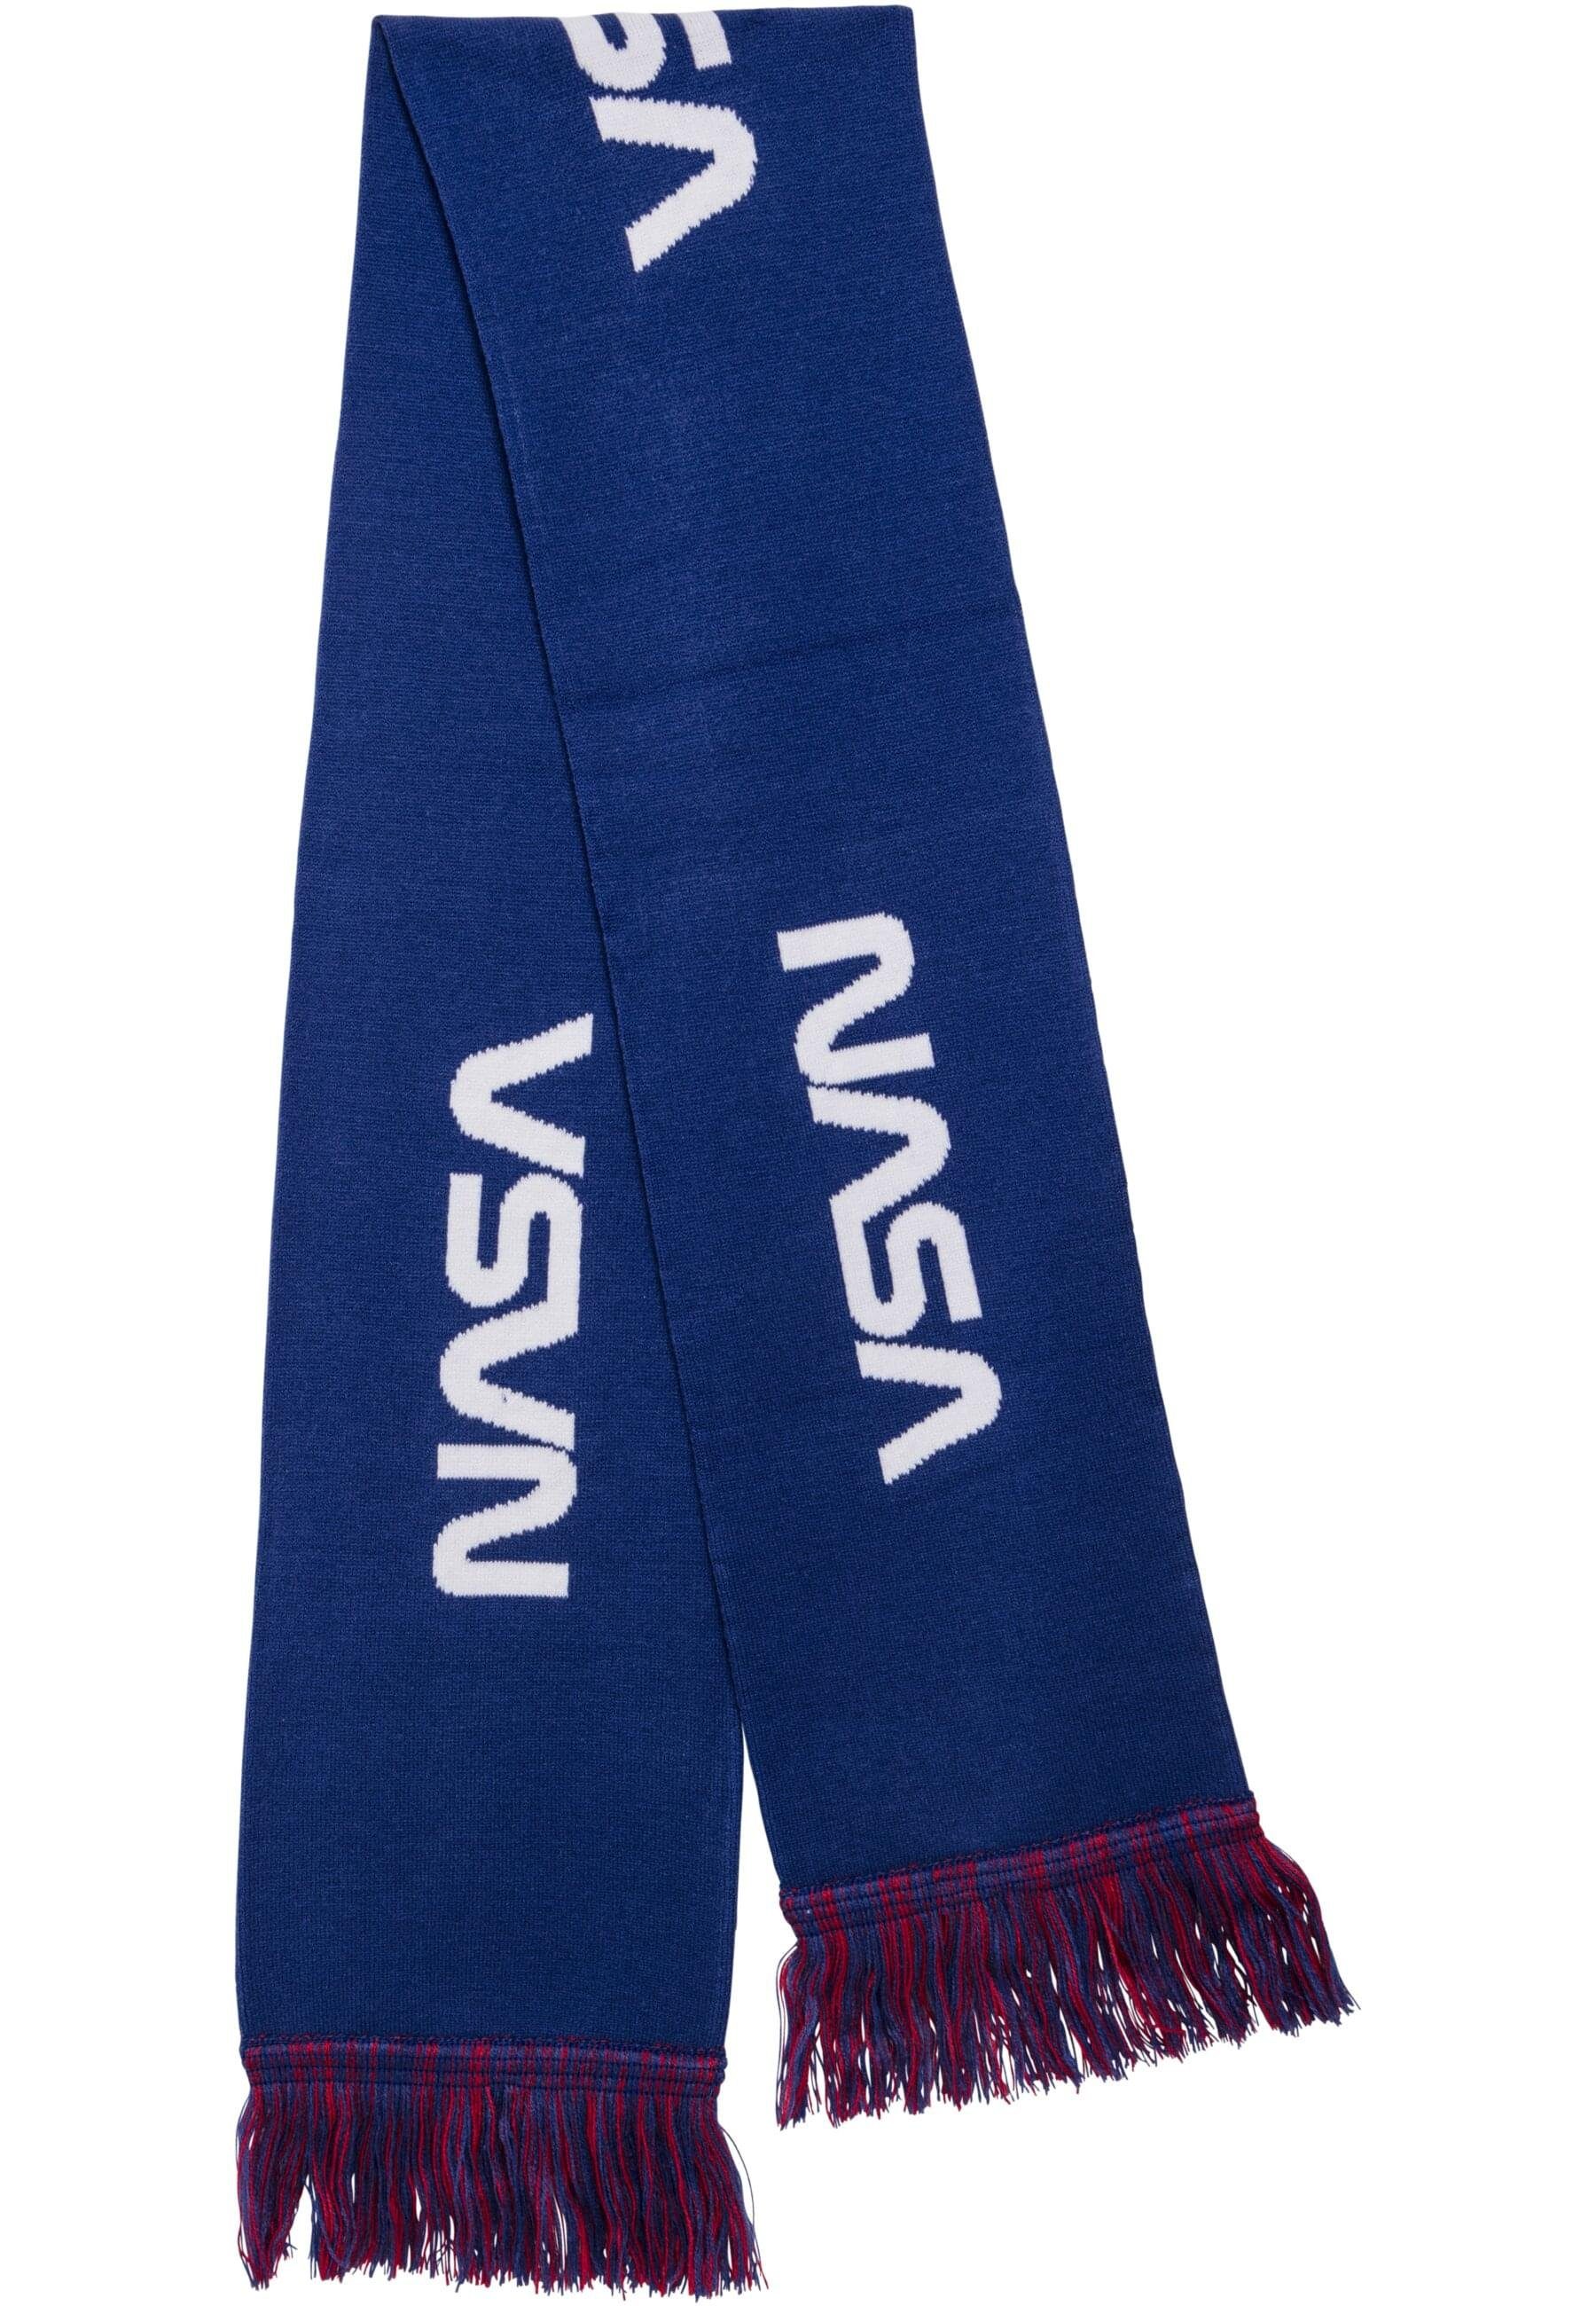 NASA MisterTee Schal (1-St) blue/red/white Unisex Scarf Knitted,